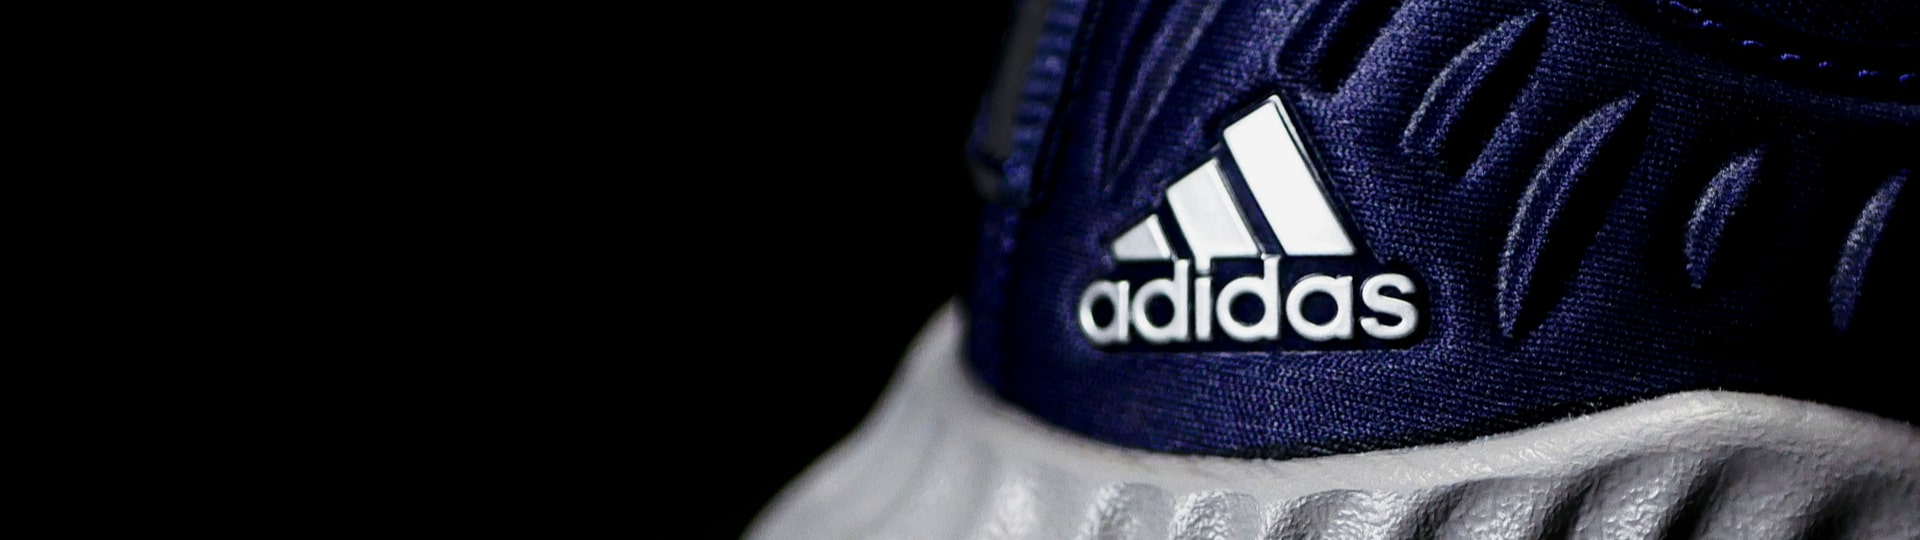 Adidas zvýšil tržby o 16 procent